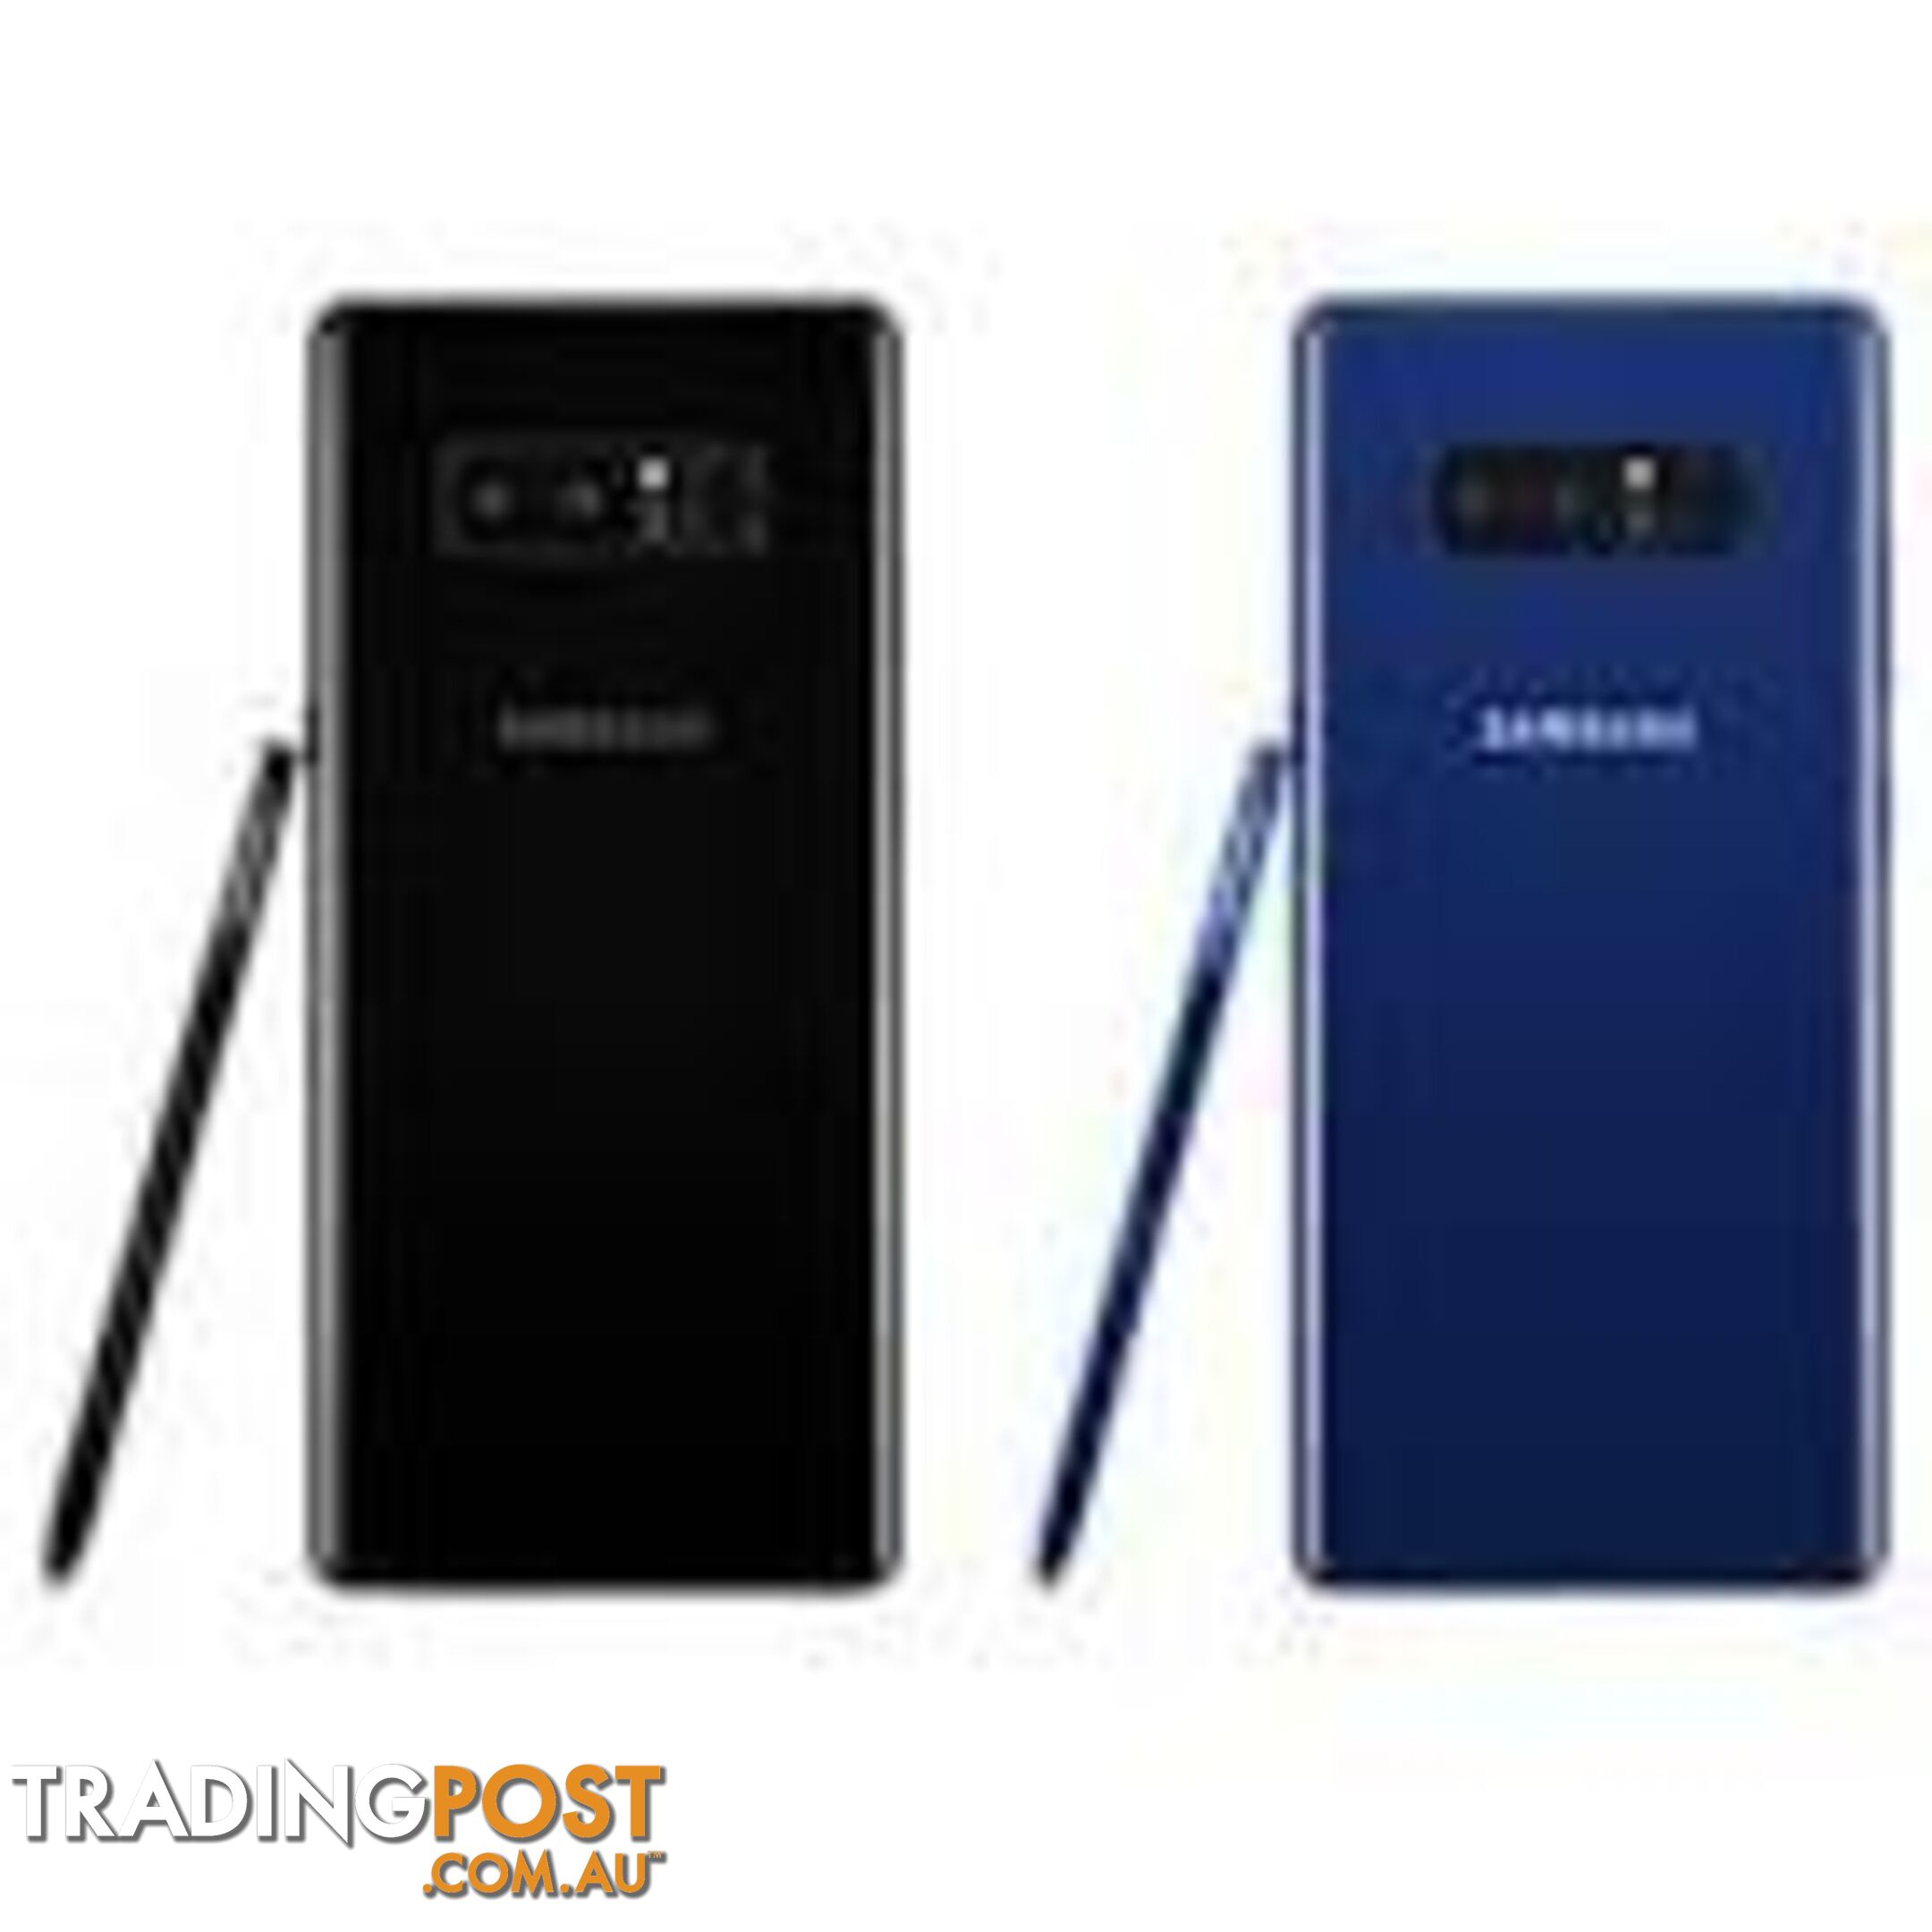 Samsung Galaxy Note 8 (Refurbished) - 1001527 - mobile phone